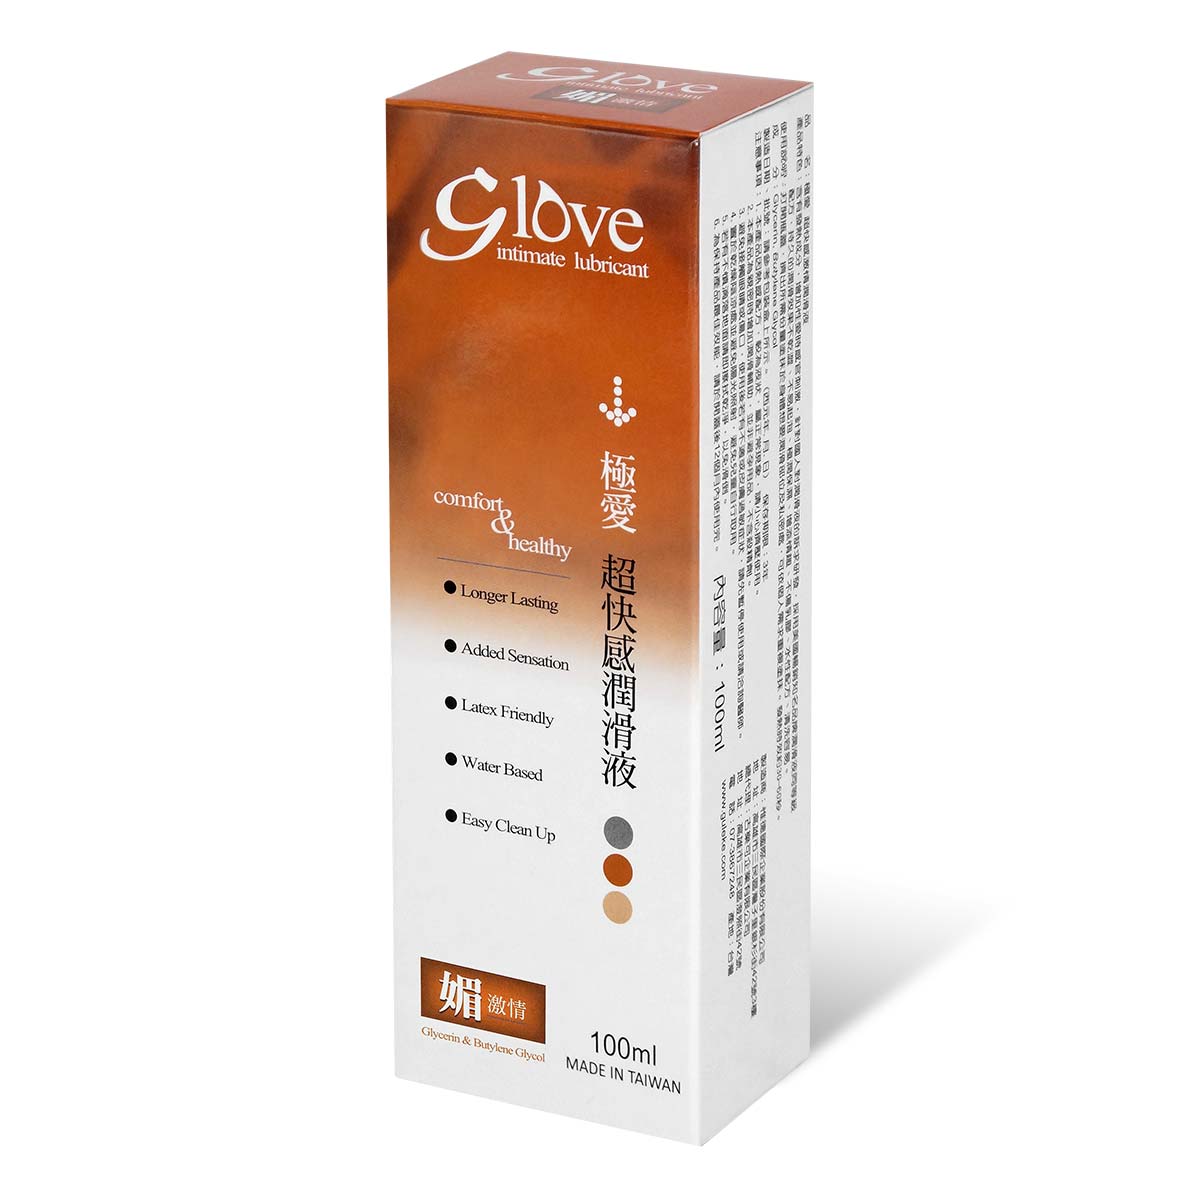 G Love intimate lubricant [Glycerin & Butylene Glycol] 100ml Water-based Lubricant-thumb_1